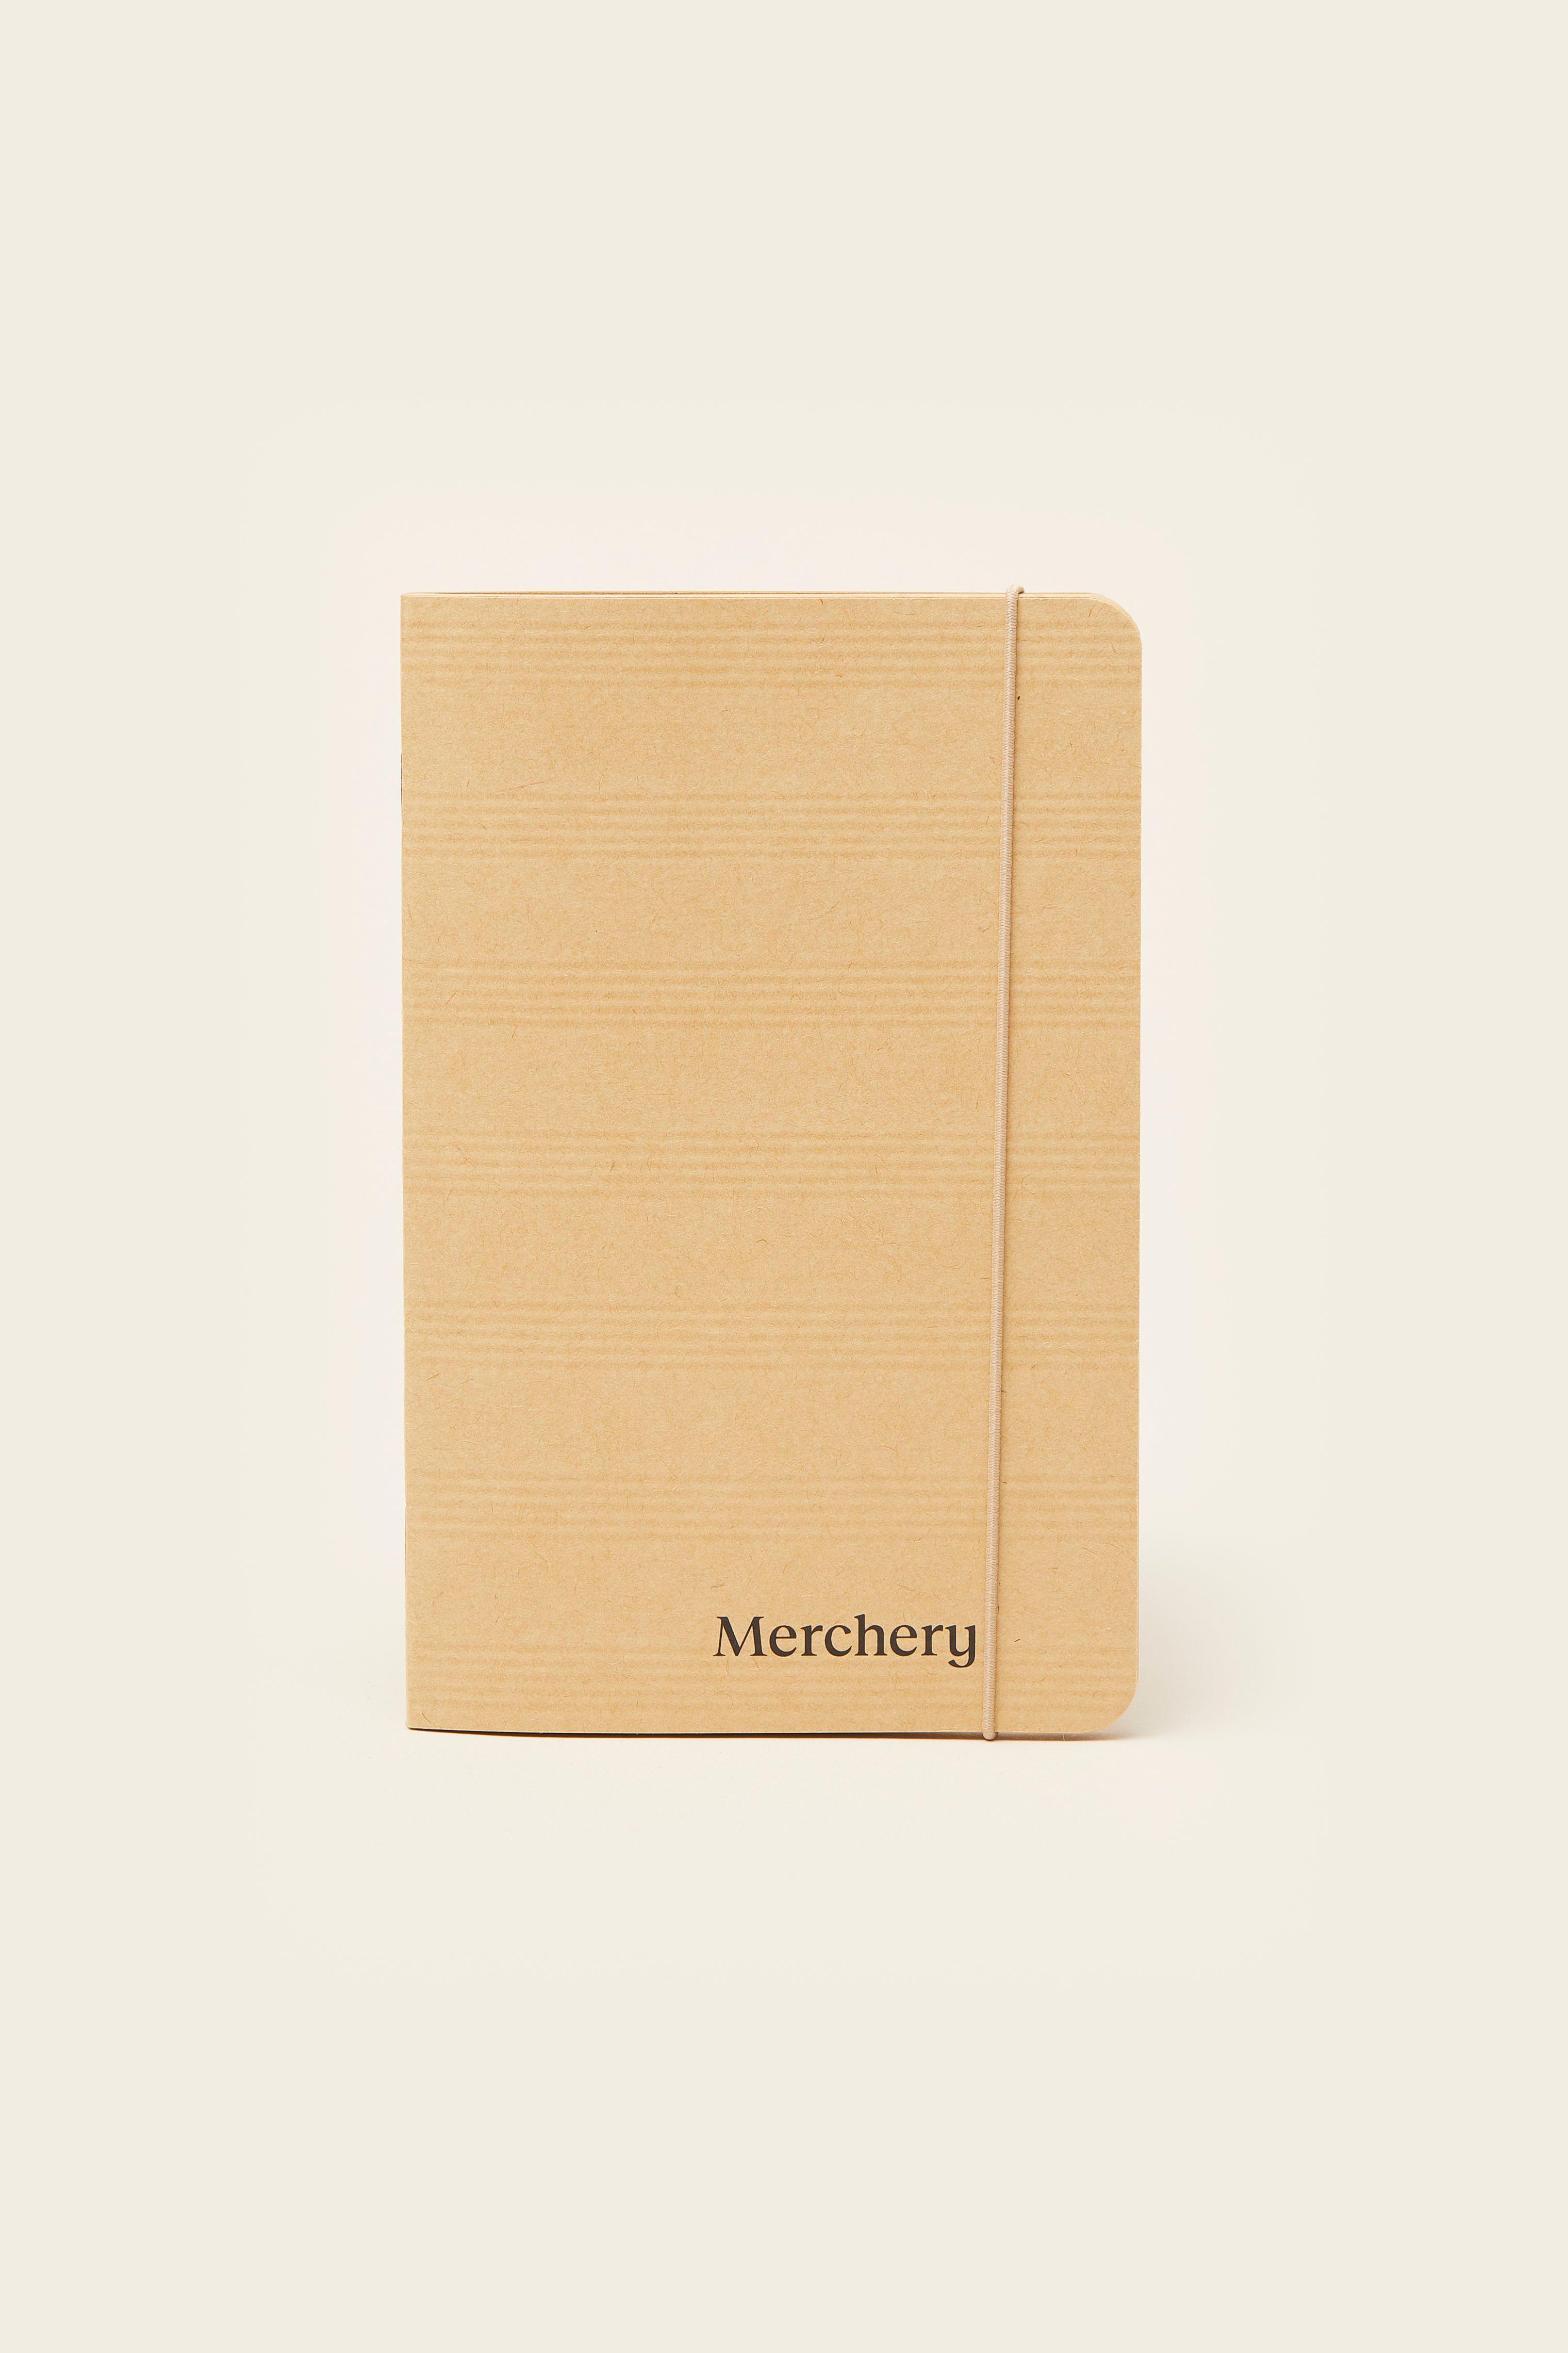 MERCHERY_Kraft notebook_small.jpg